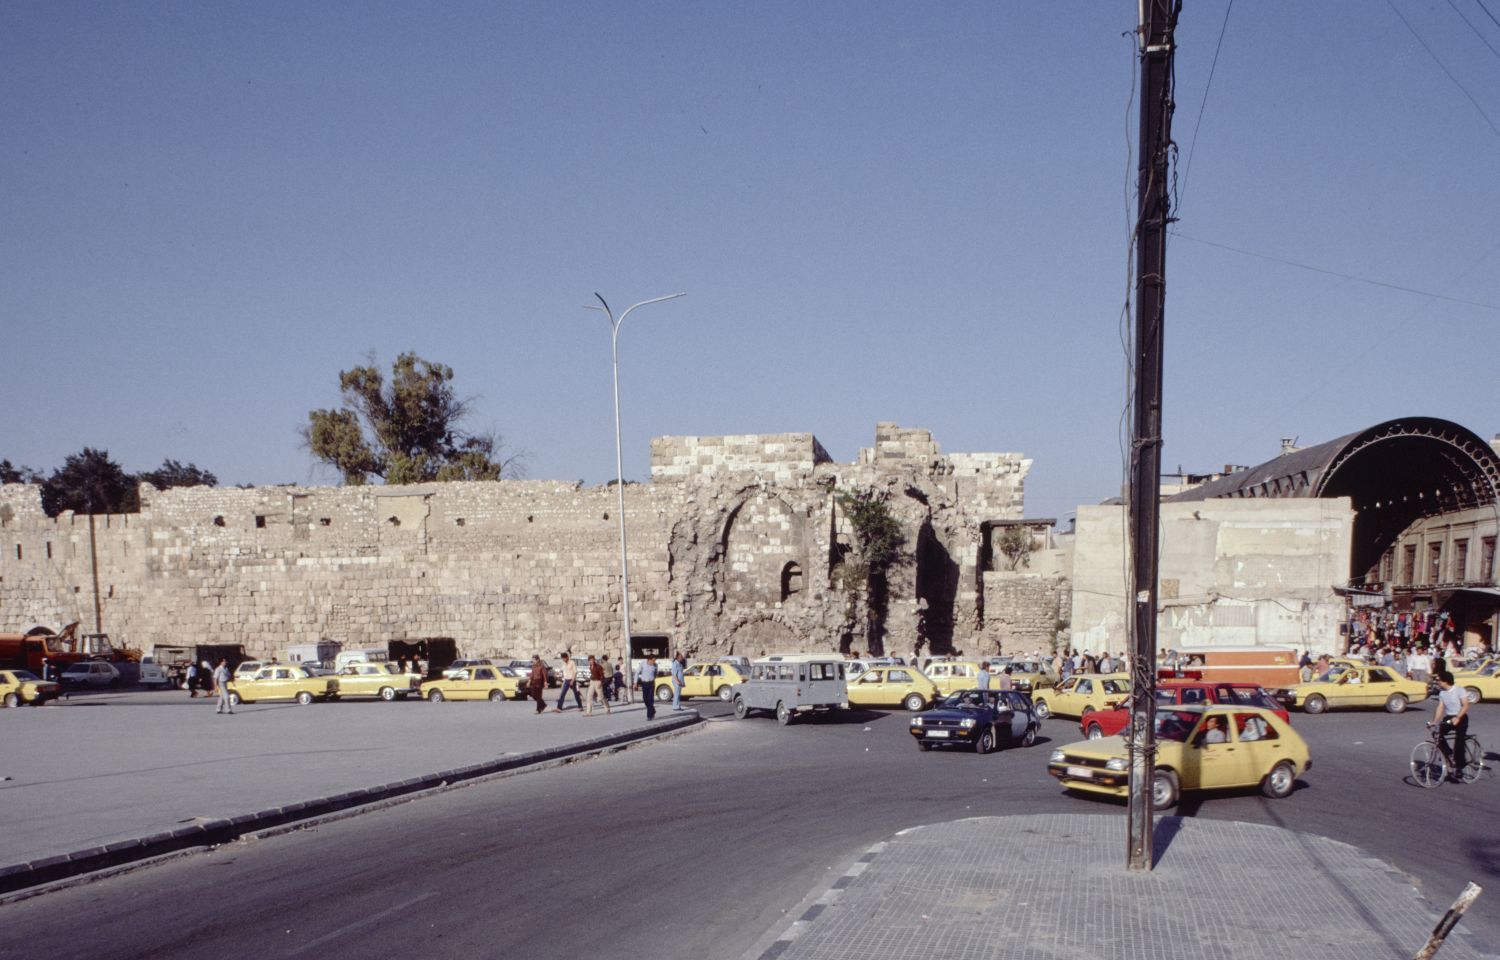 View of western wall and entrance to Suq al-Hamidiyya.